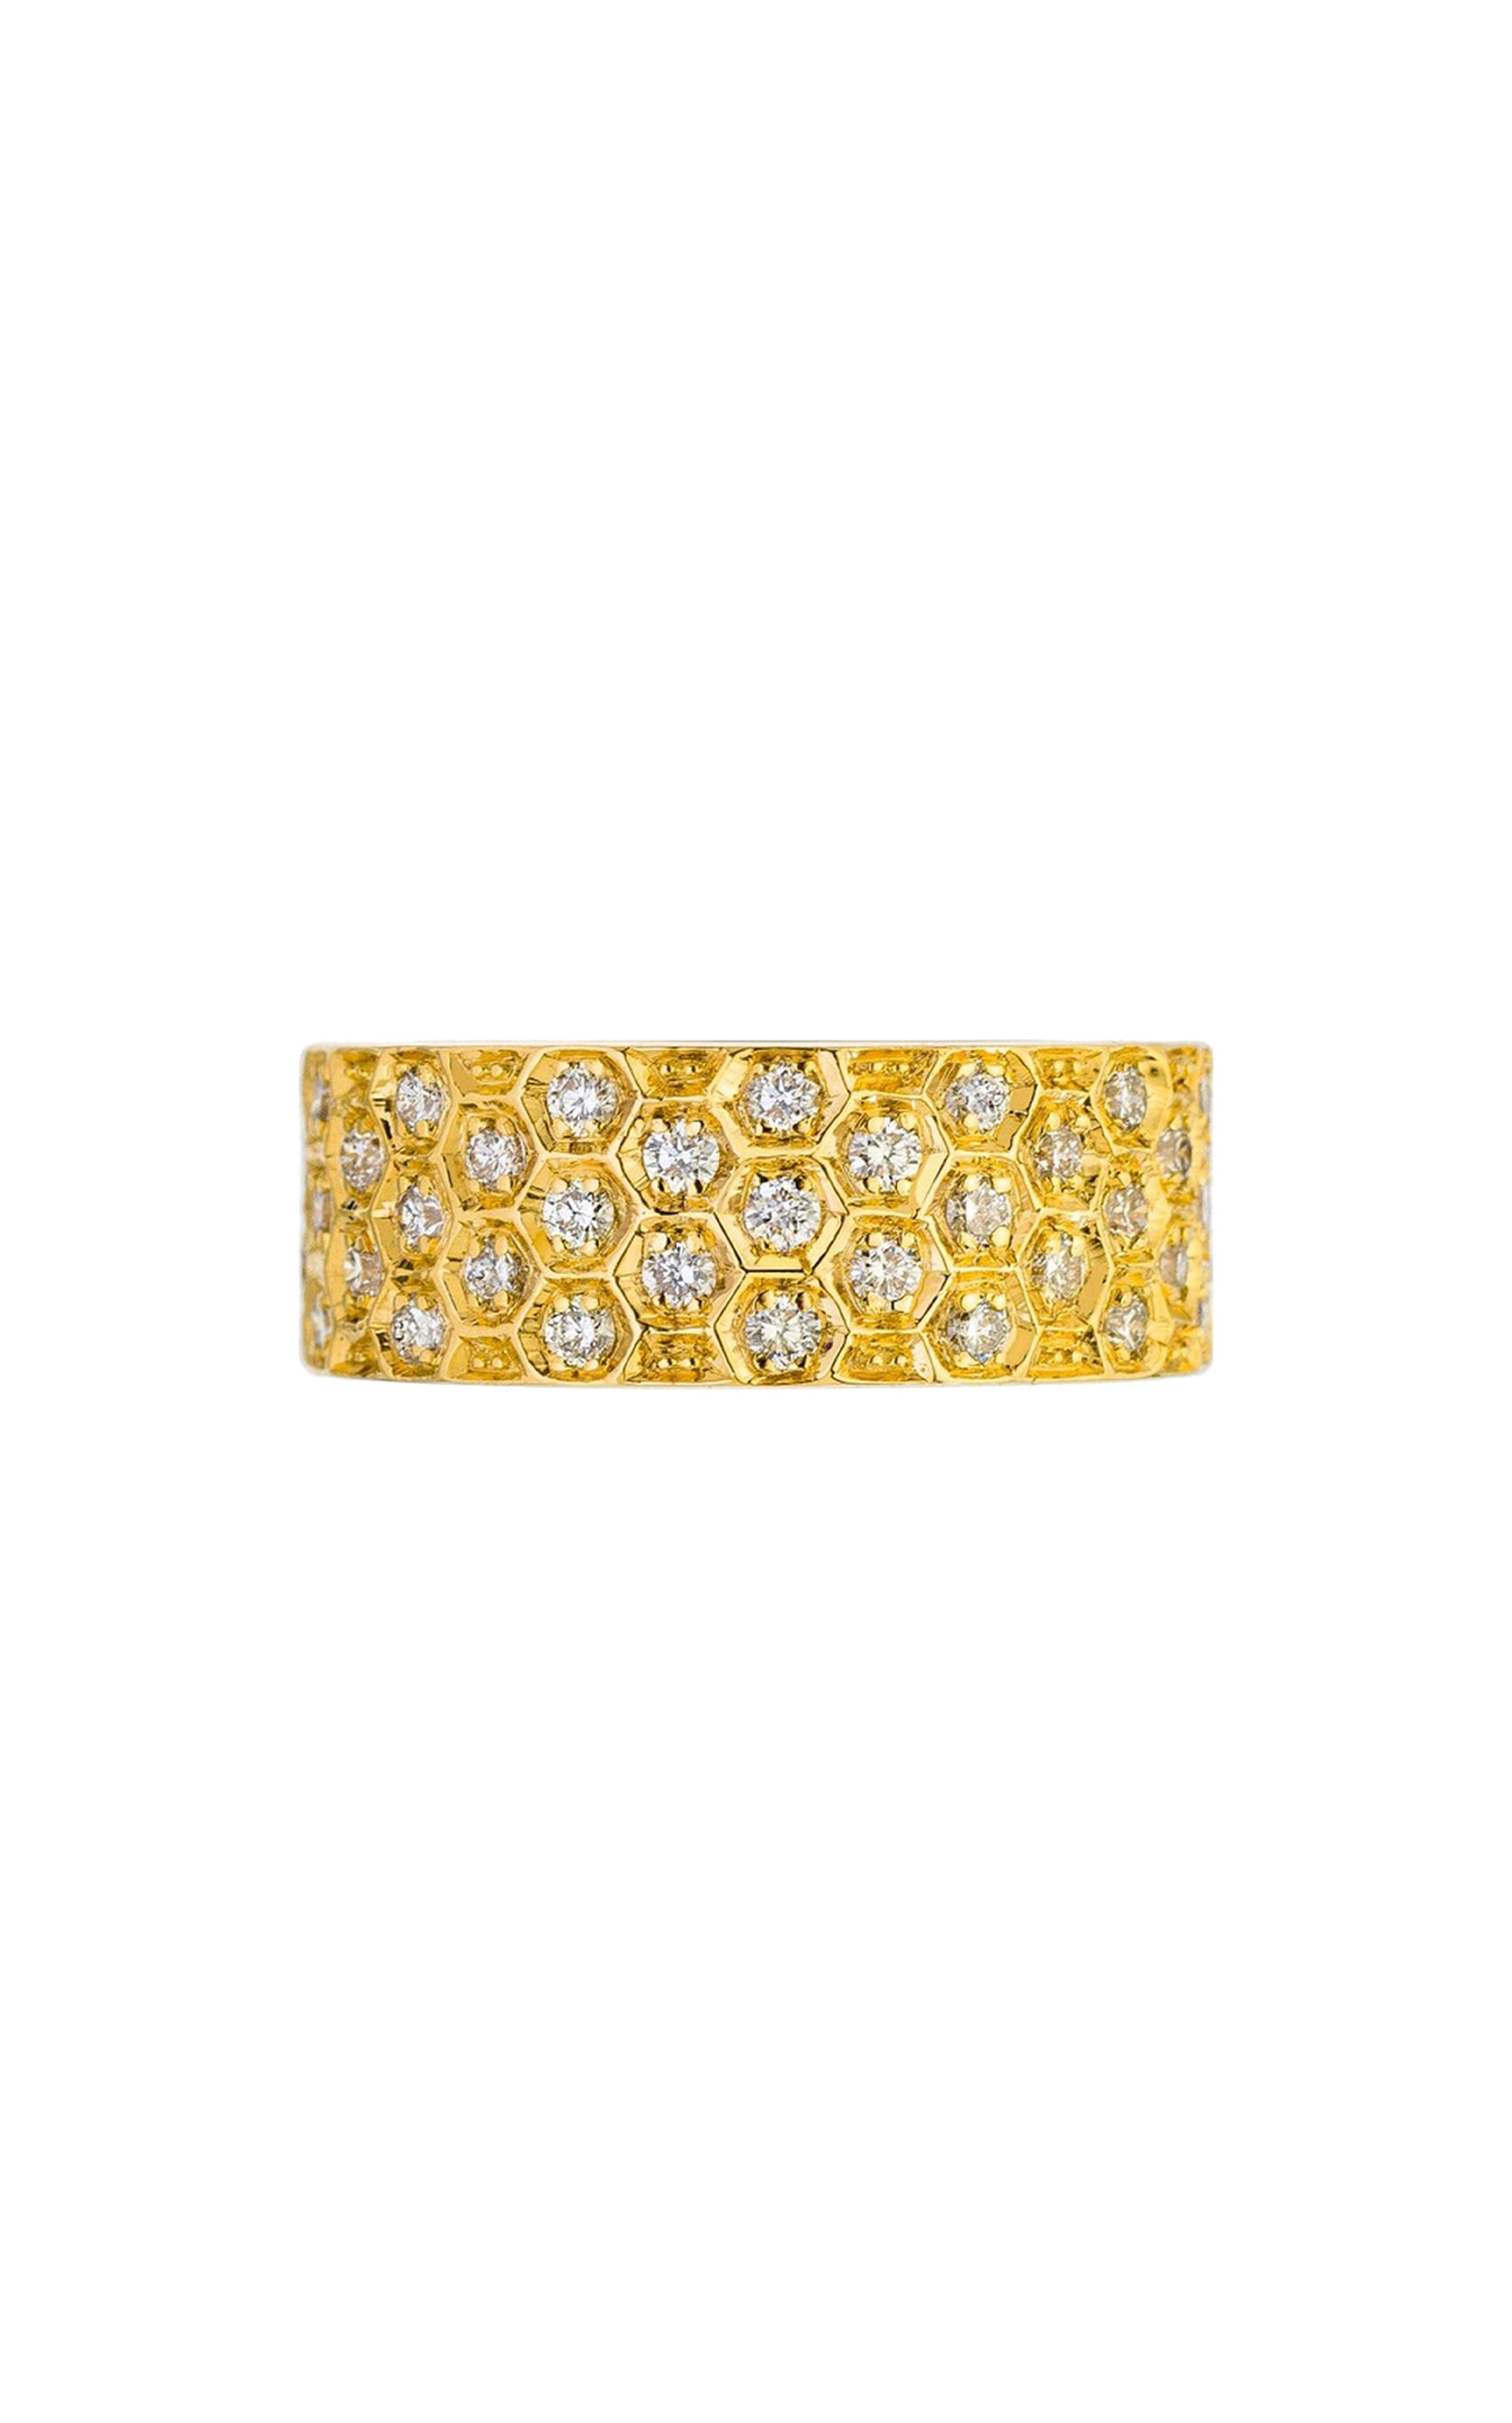 The Mosaic 18K Yellow Gold Diamond Ring